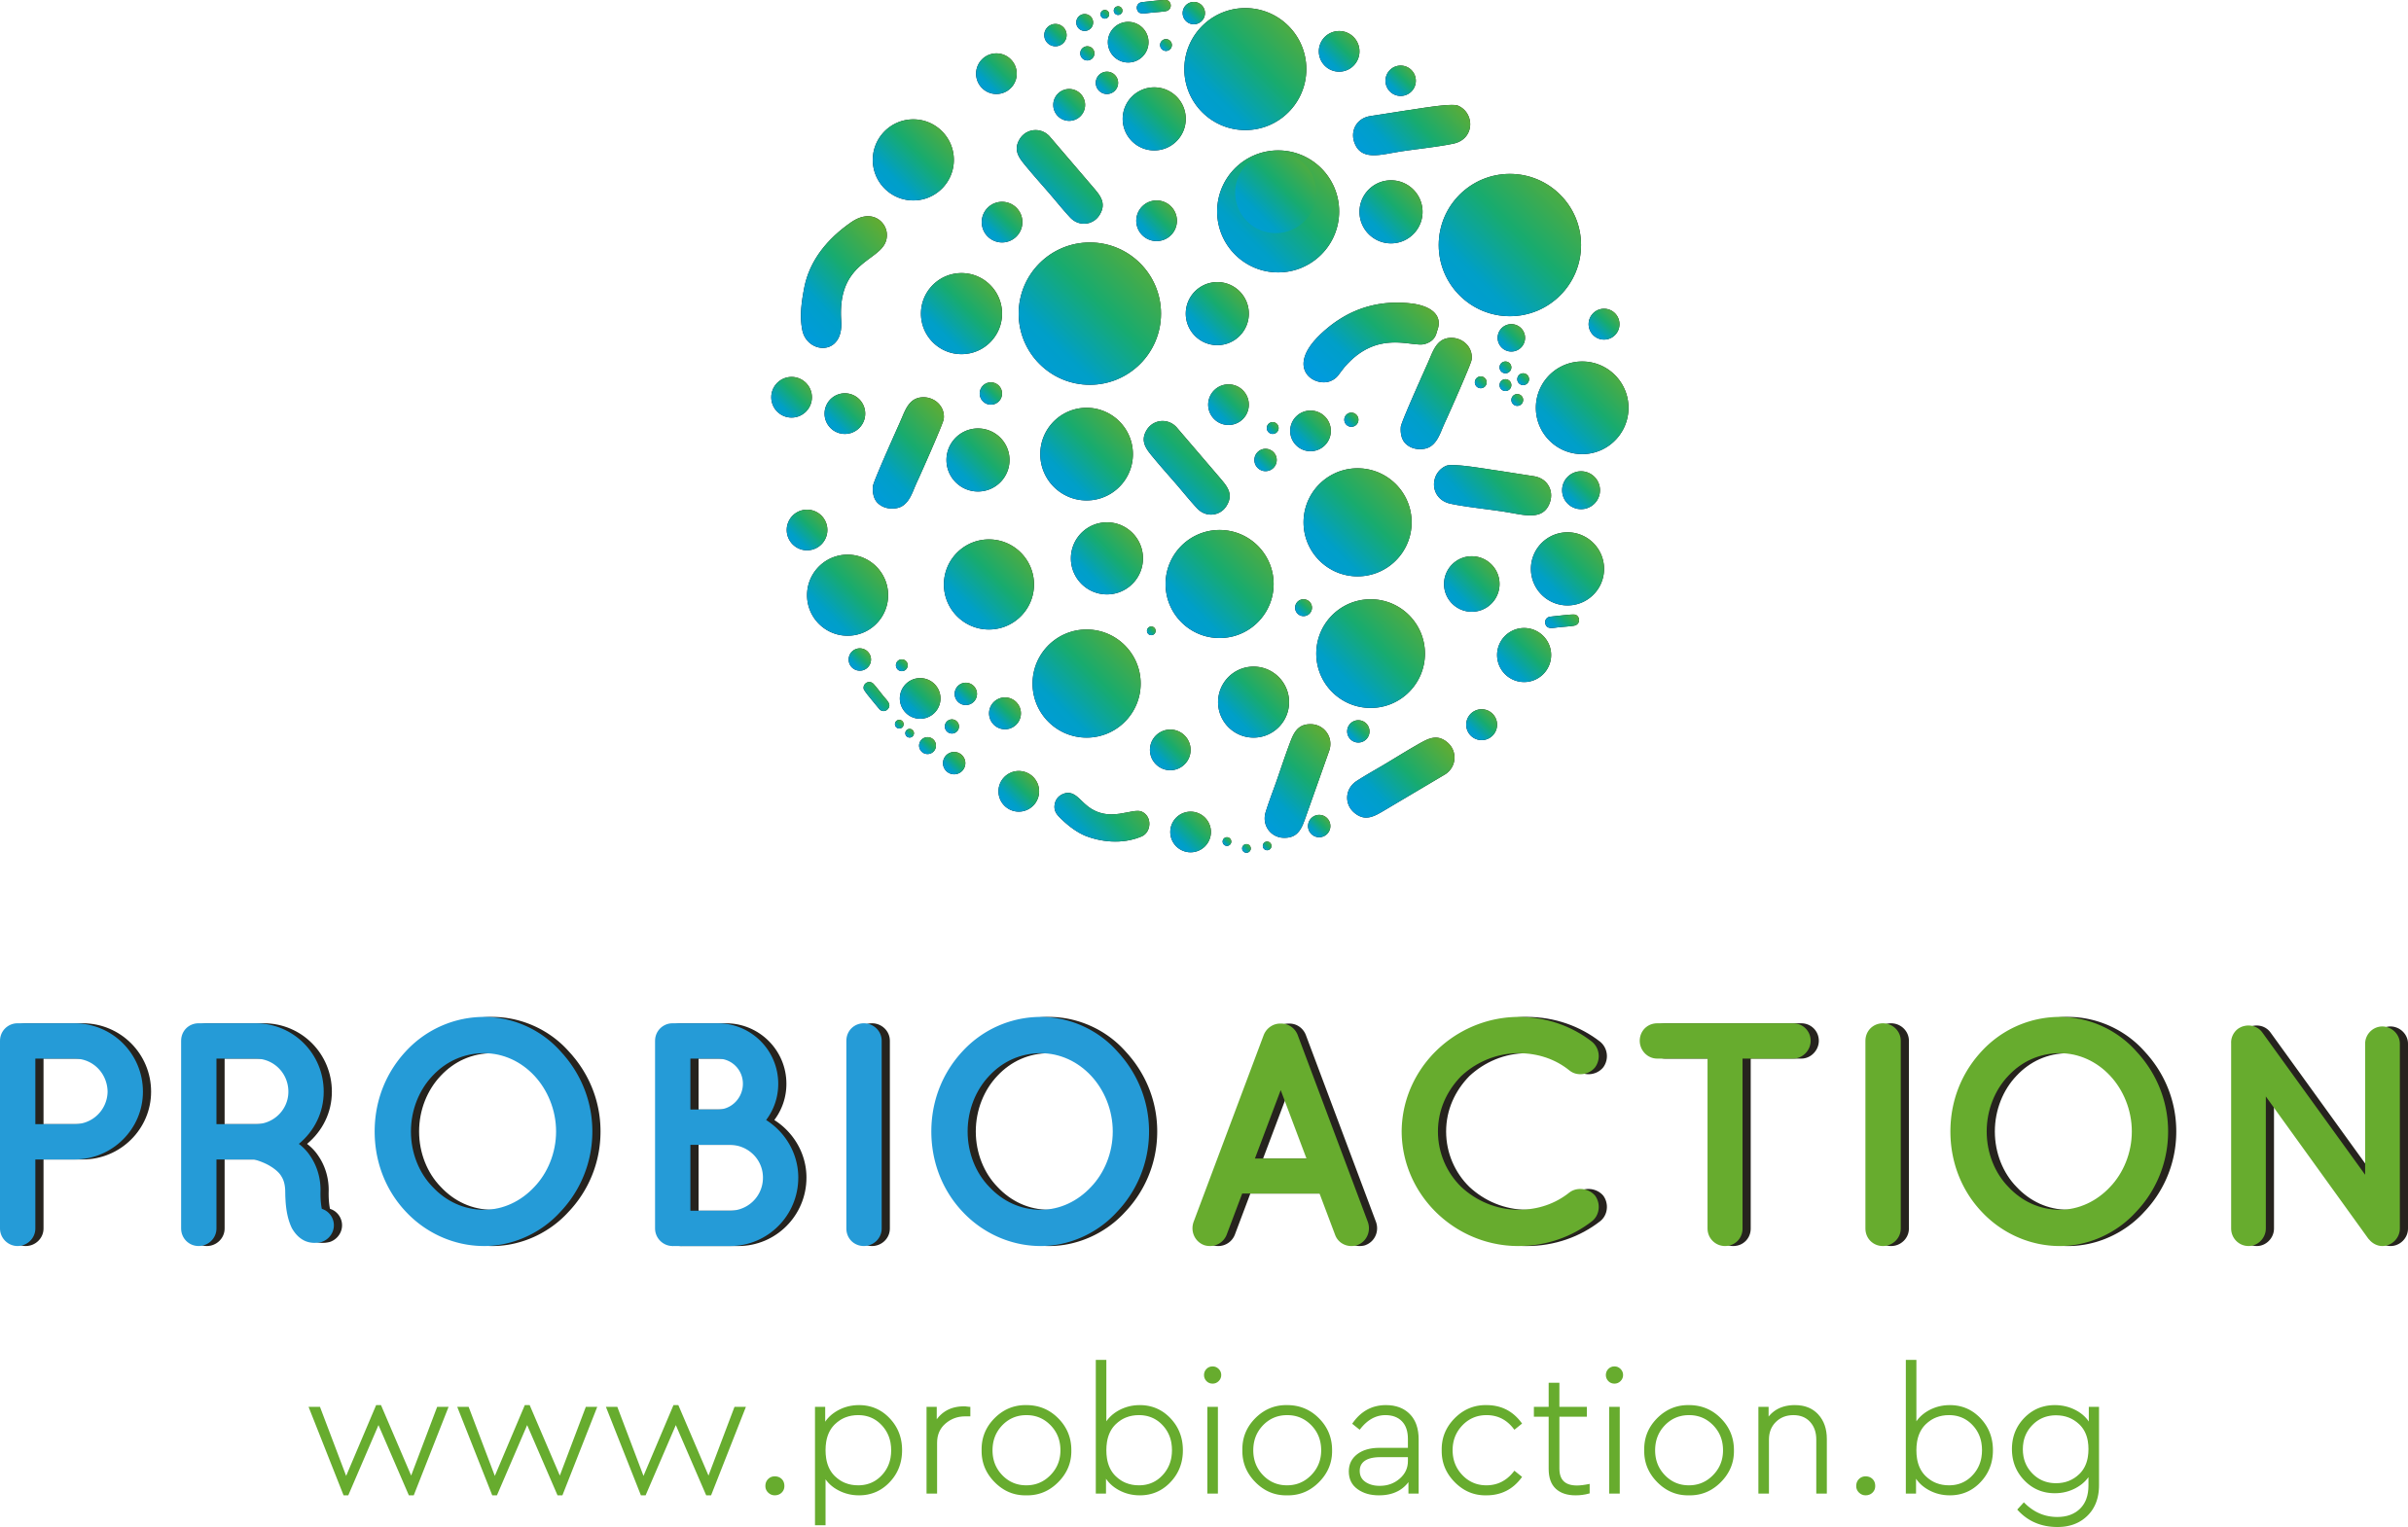 Probioaction logo